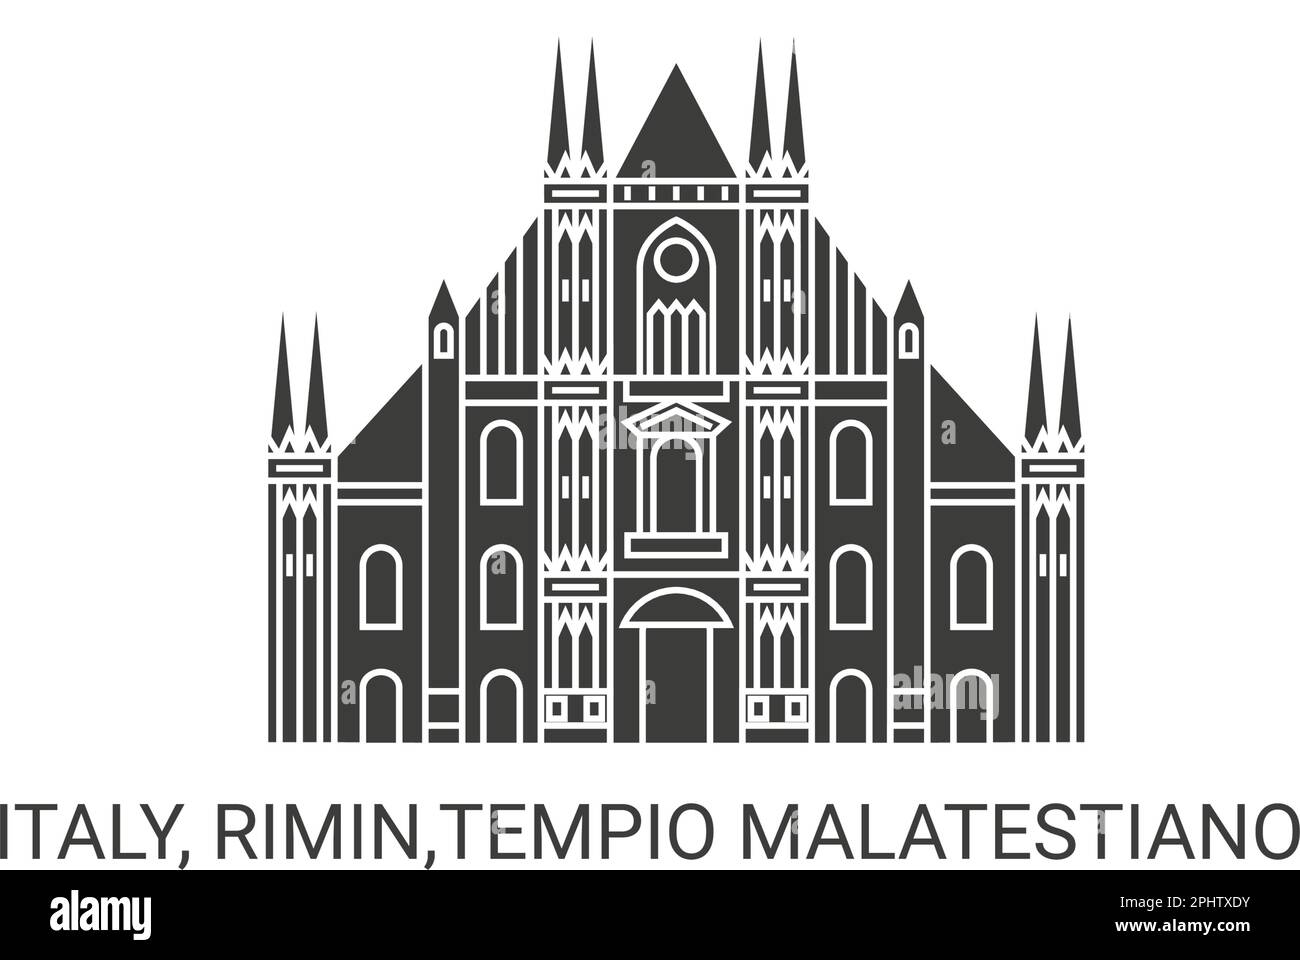 Italien, Rimin, Tempio Malatestiano, Reise-Wahrzeichen-Vektordarstellung Stock Vektor